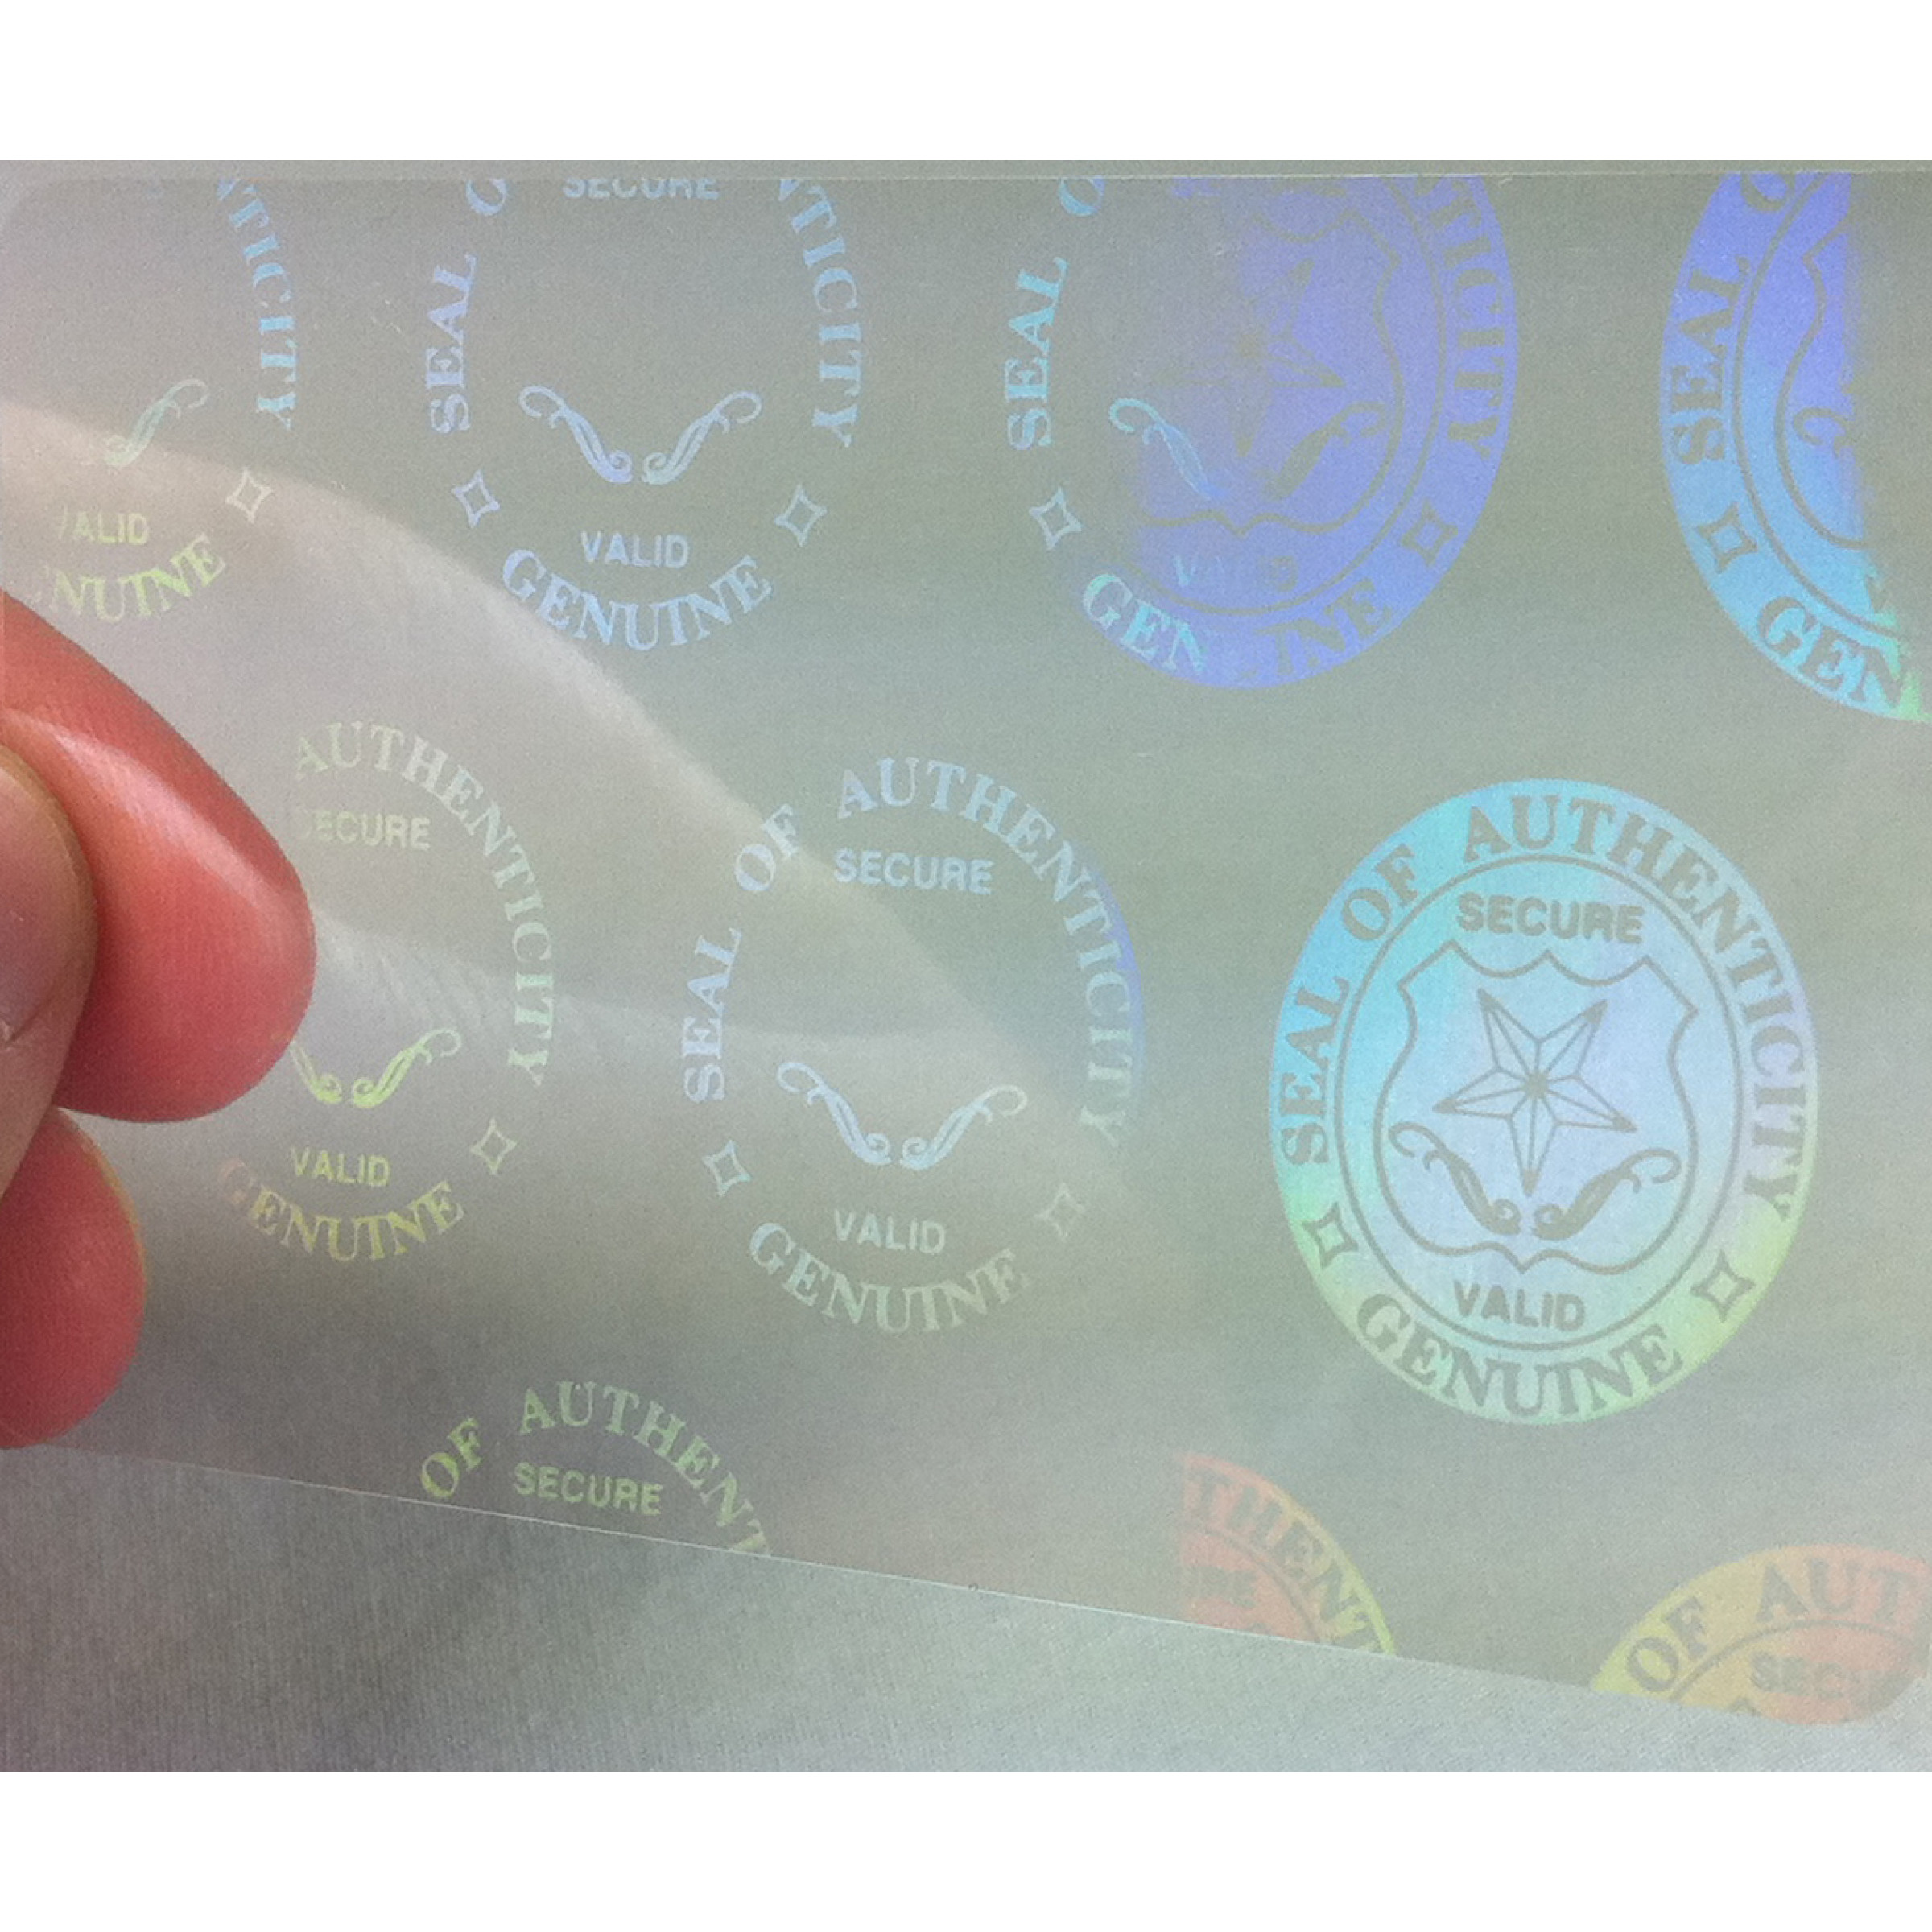 Lot of 10 Hologram Overlays Certified  Overlay Inkjet Teslin ID Cards 